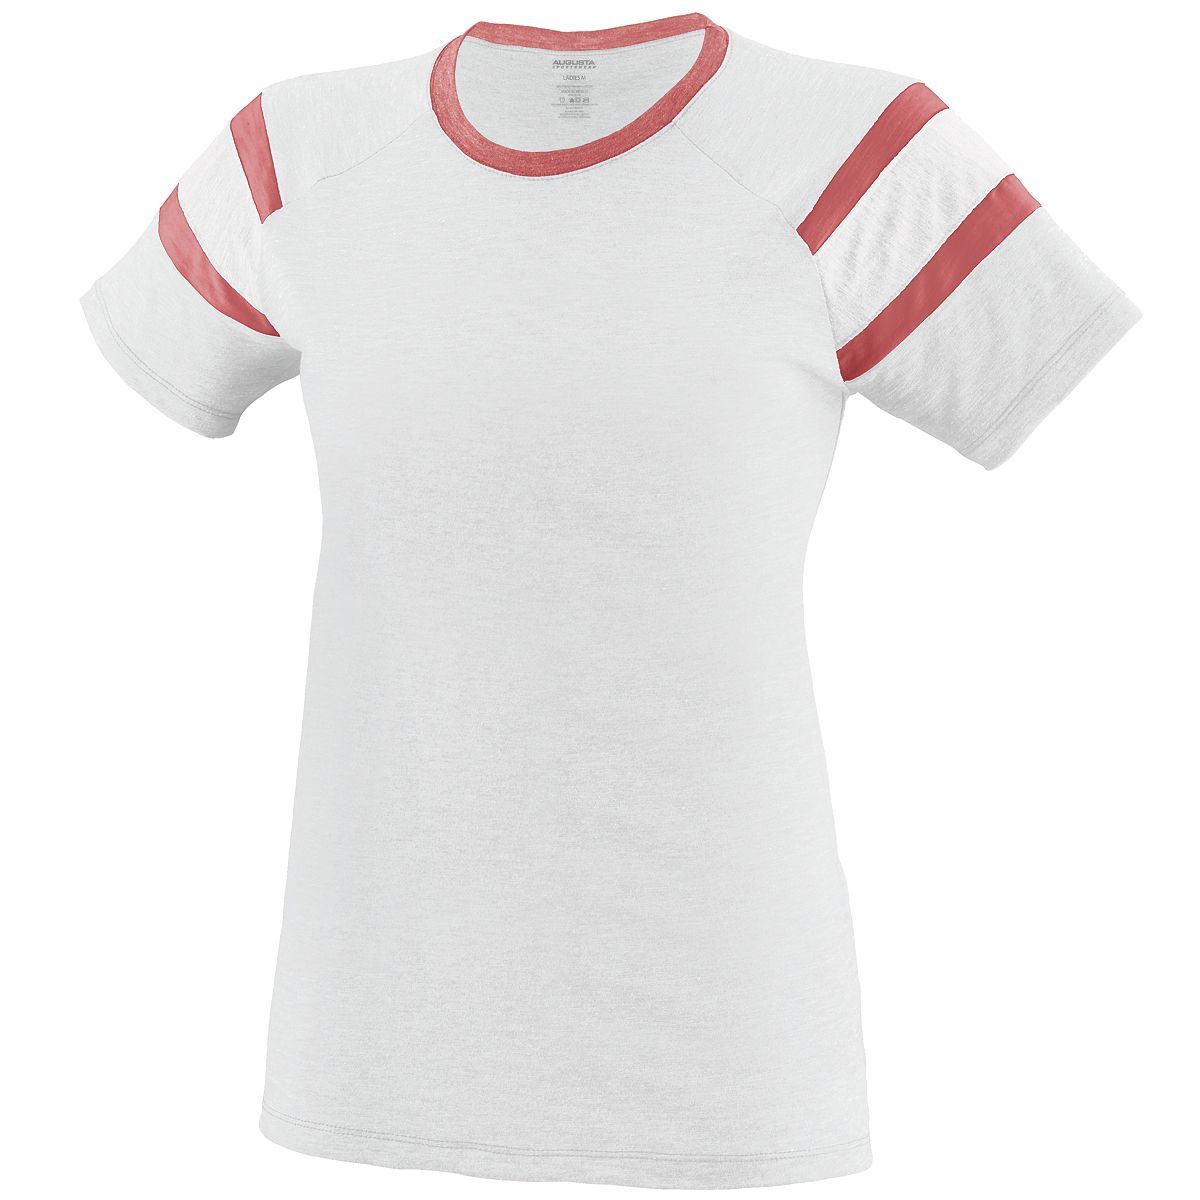 Augusta Sportswear Ladies Fanatic Tee in White/Red/White  -Part of the Ladies, Ladies-Tee-Shirt, T-Shirts, Augusta-Products, Shirts product lines at KanaleyCreations.com